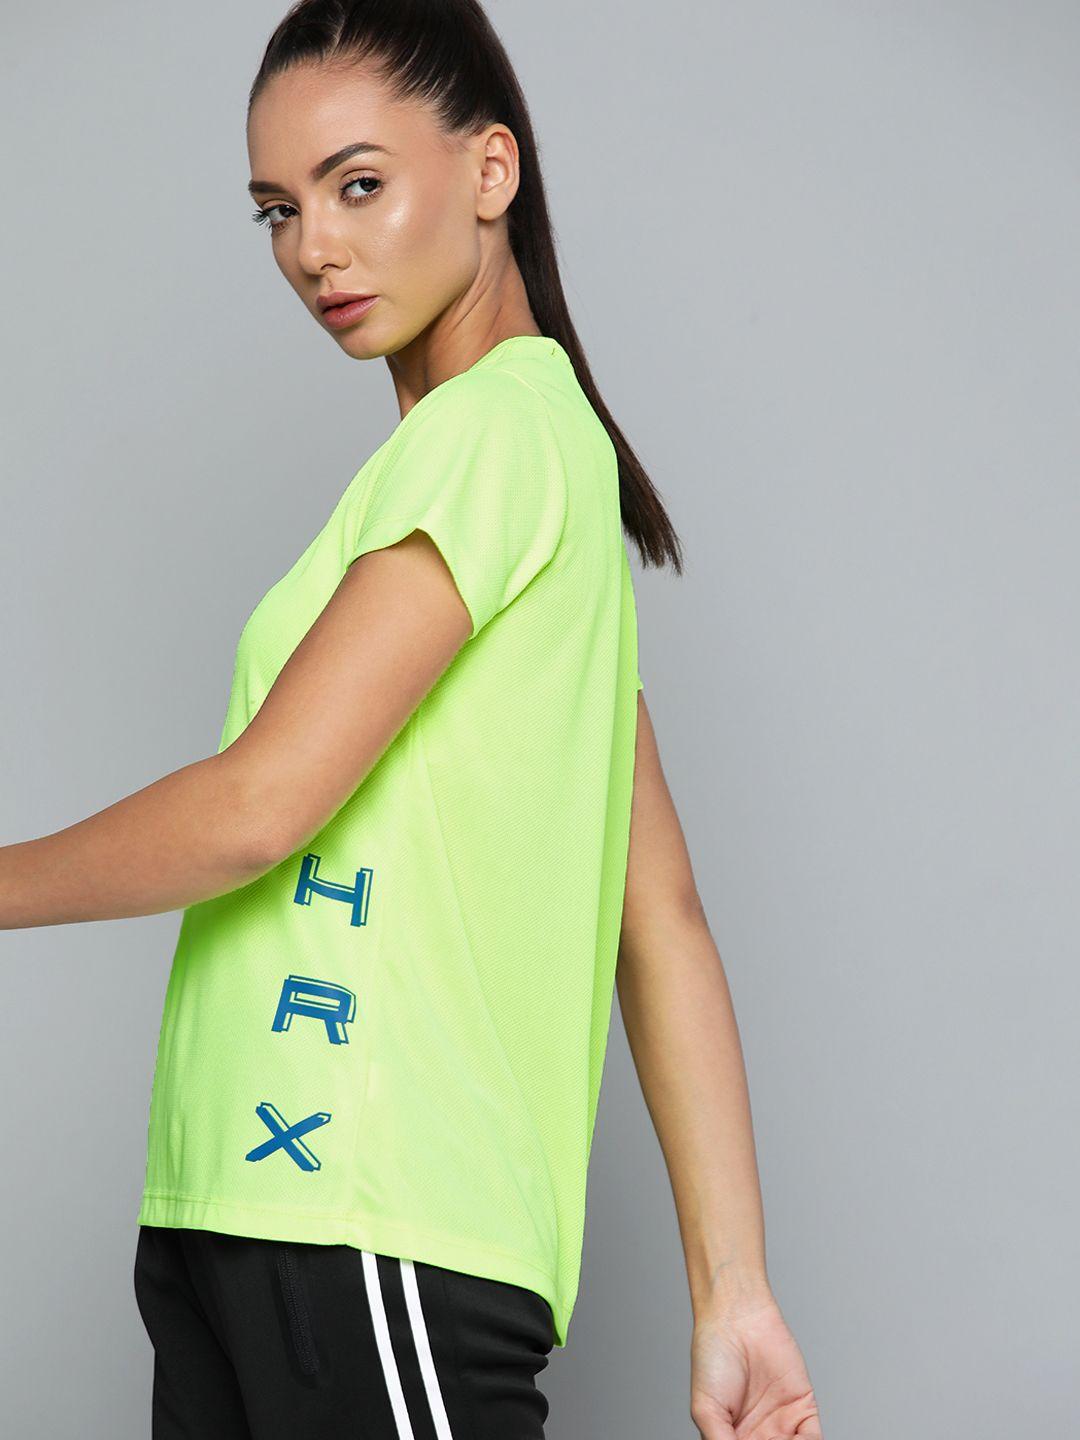 hrx by hrithik roshan running women neon lime rapid-dry brand carrier tshirts